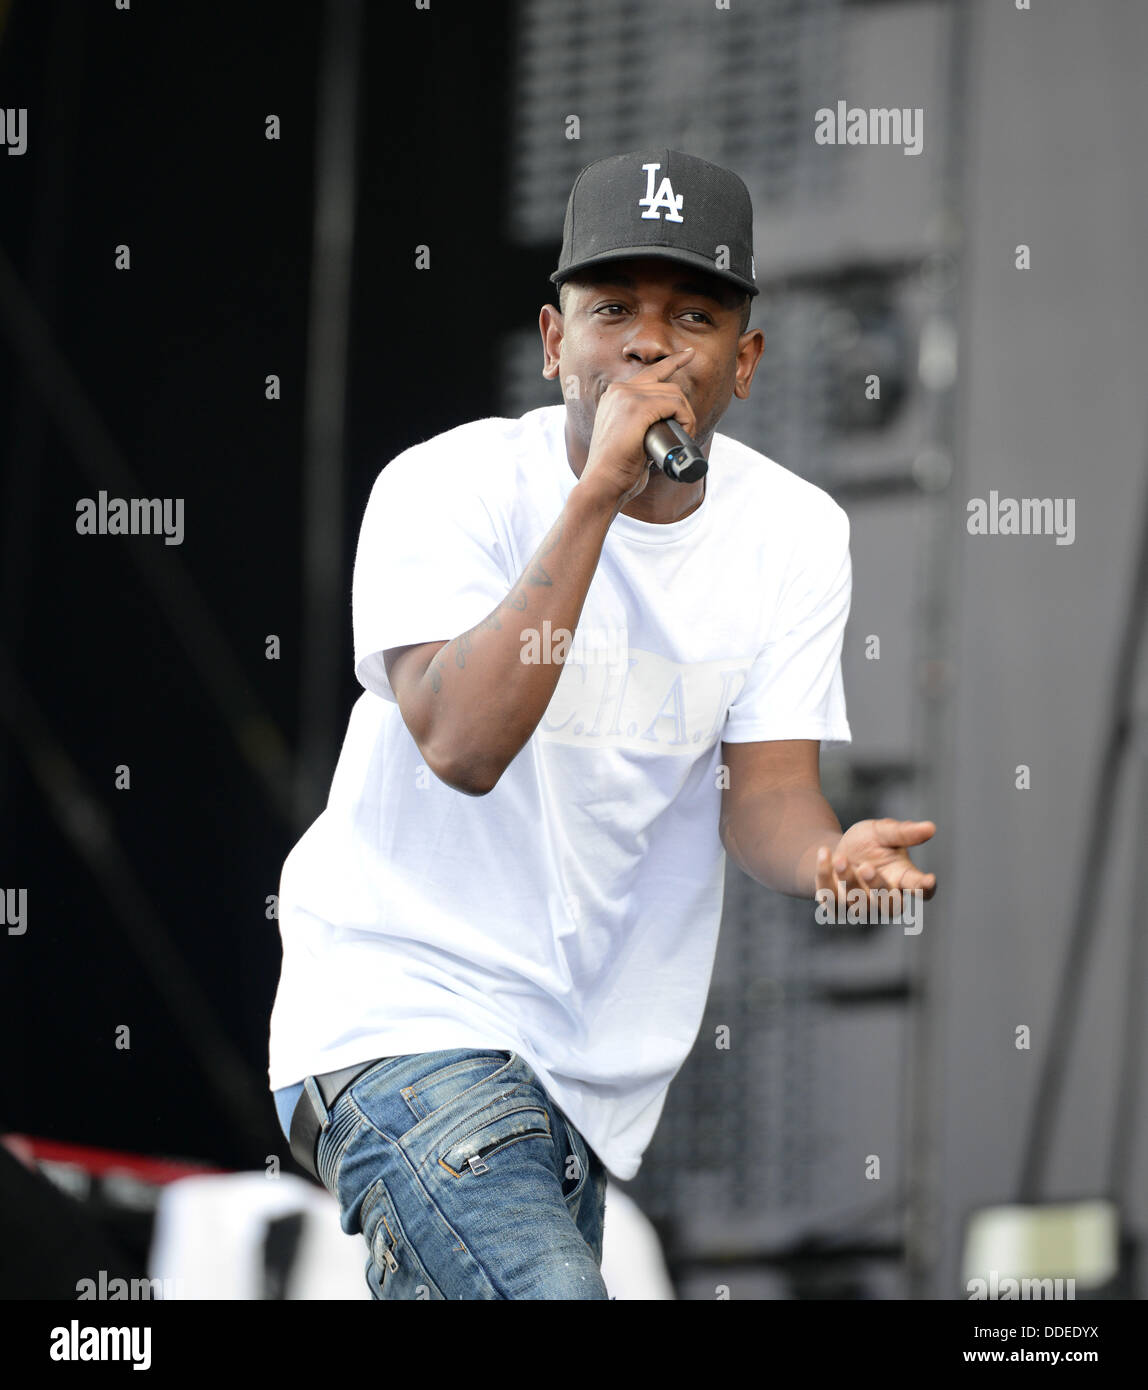 Kendrick Lamar: Photos Of The Rapper – Hollywood Life